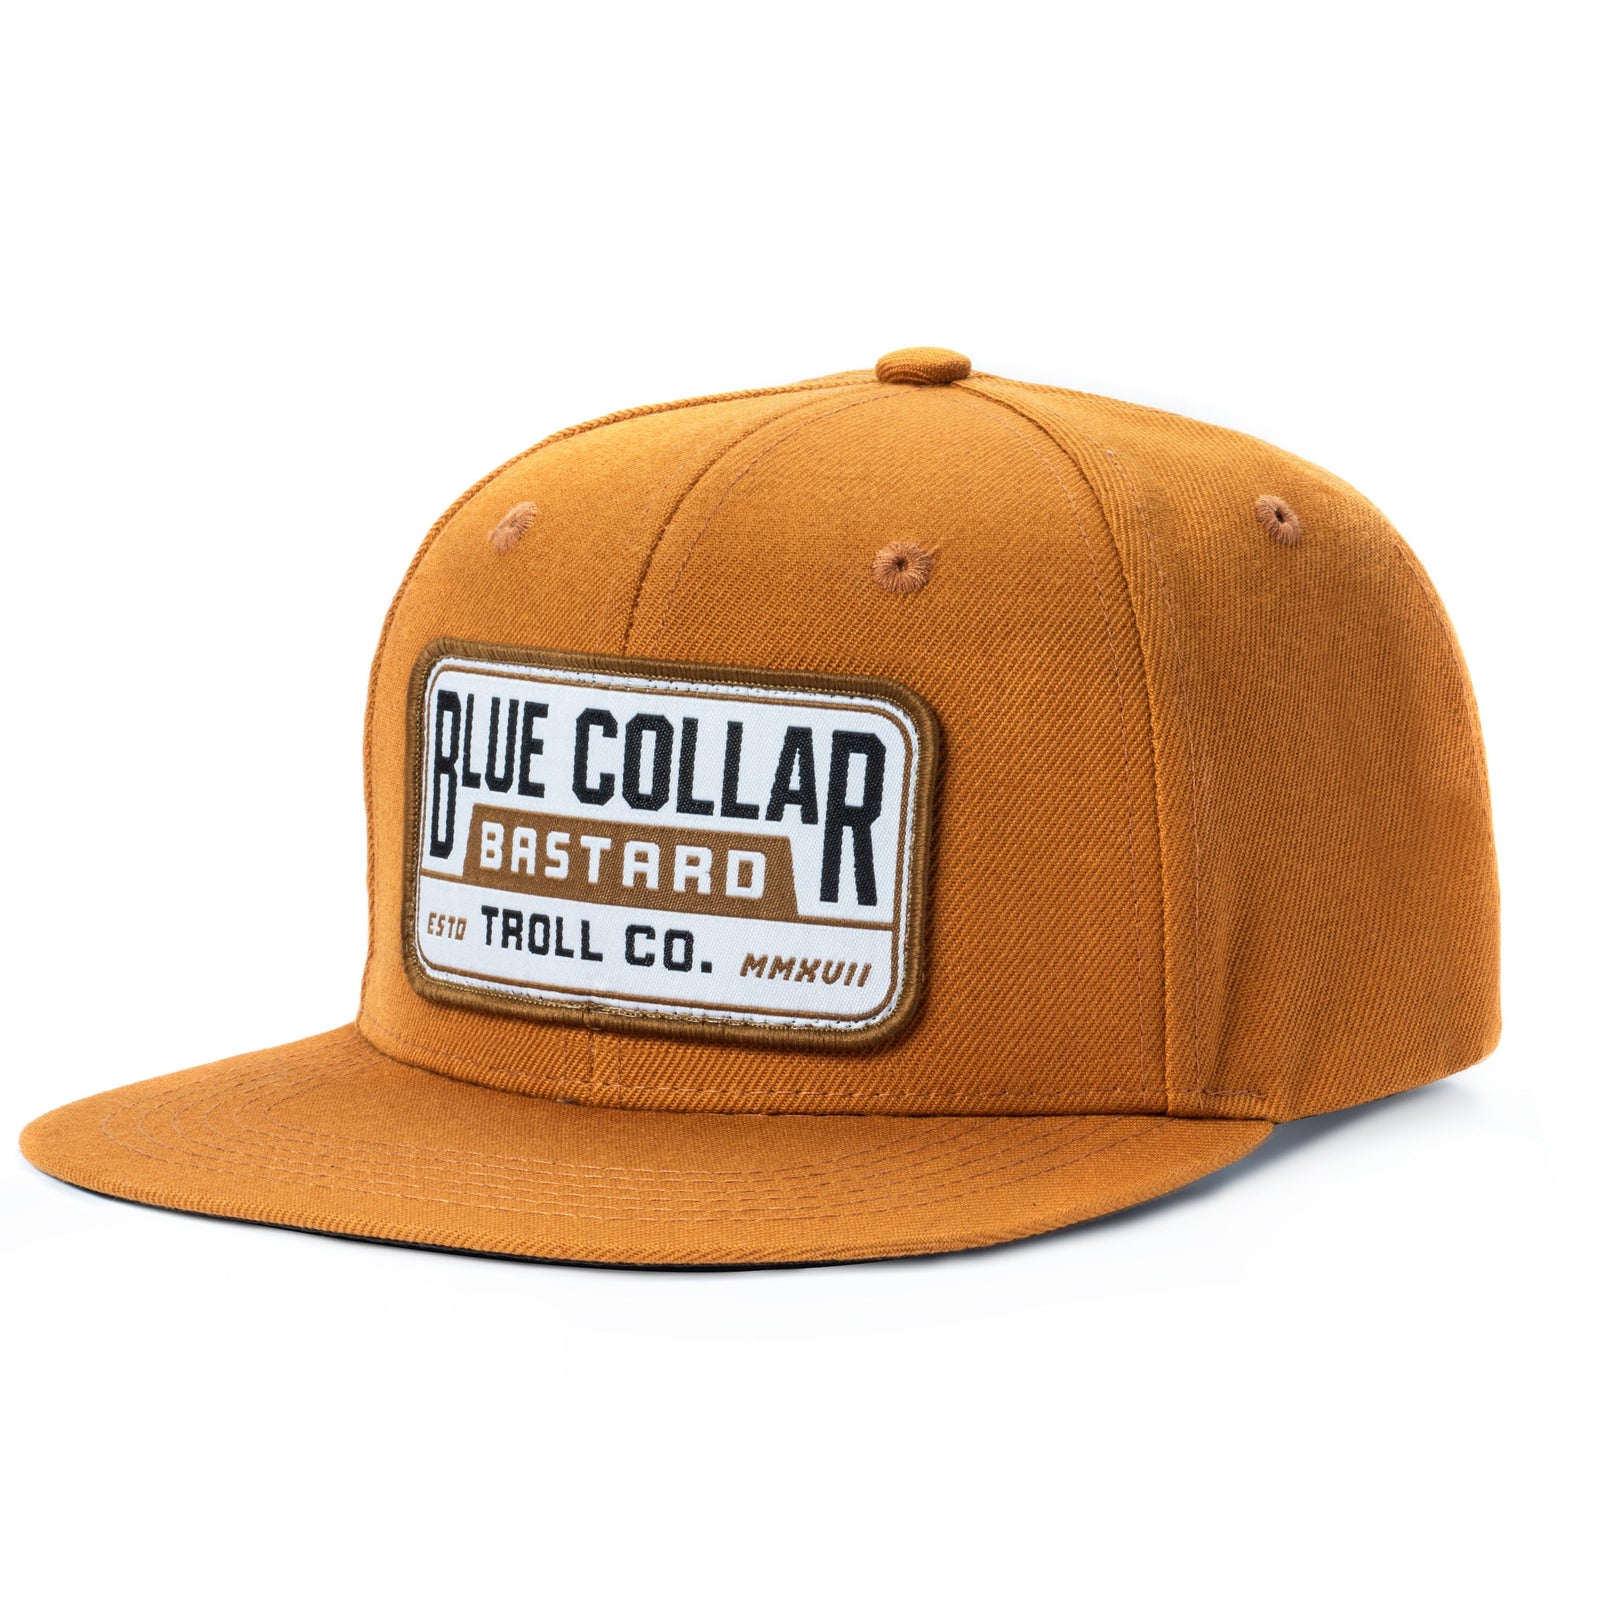 Troll Co BCB snapback hat in saddle color